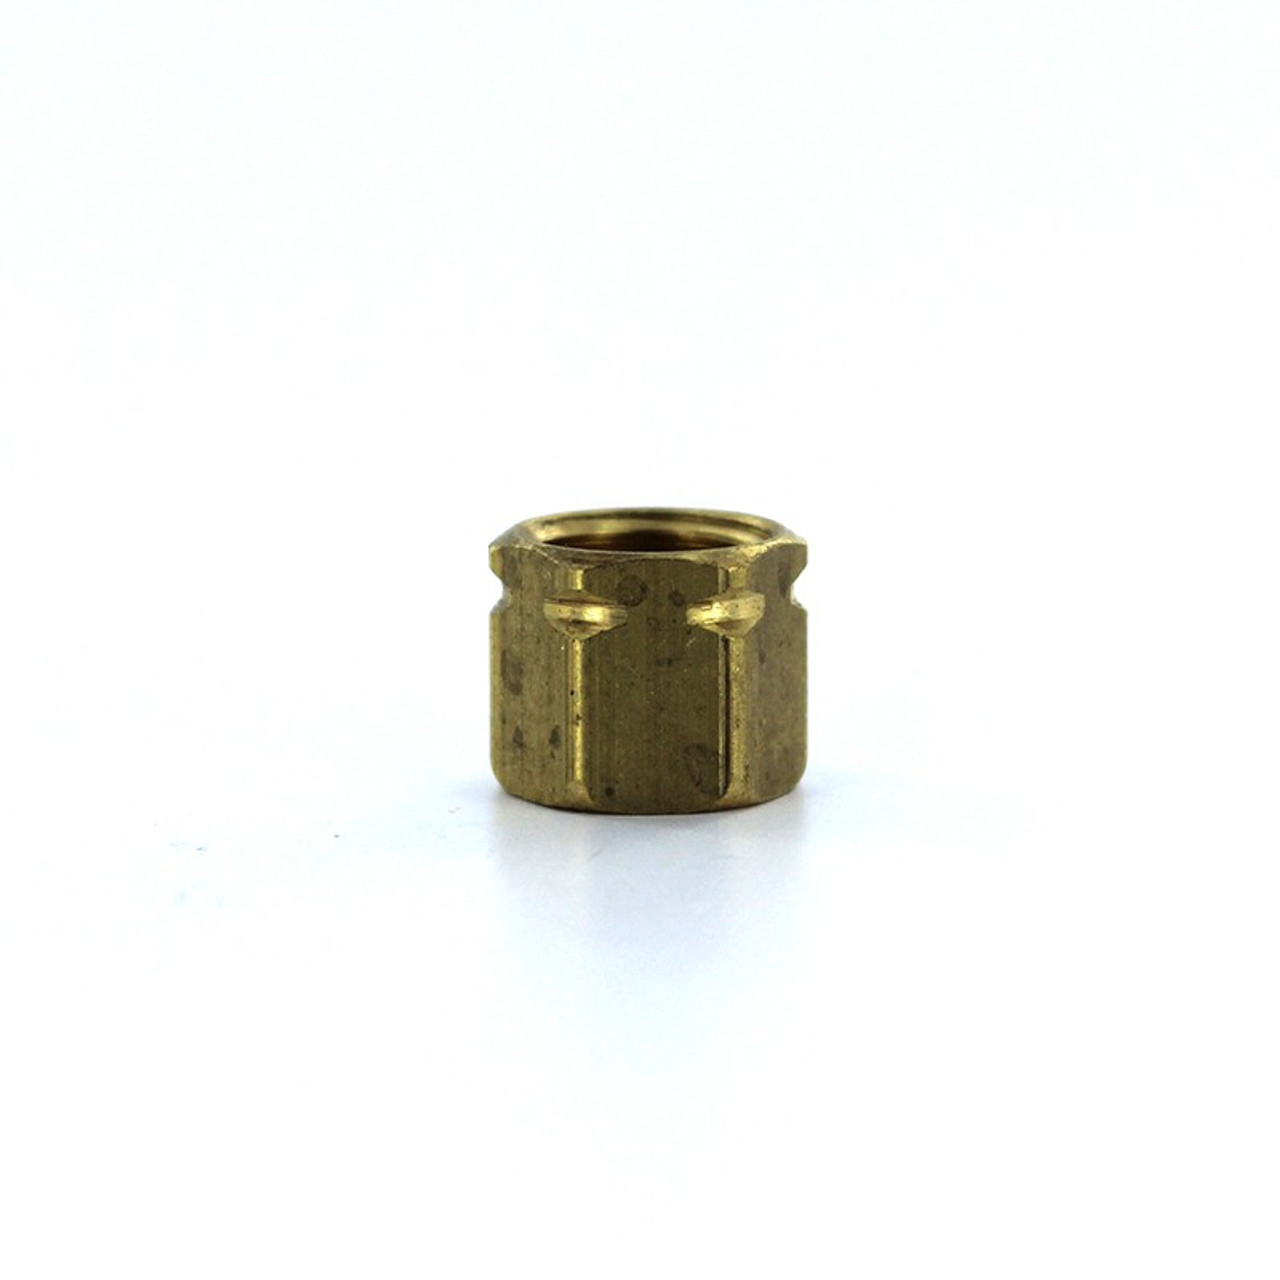 Parker 61Ca-4 1/4" Brass Compression Nut & Ferrule